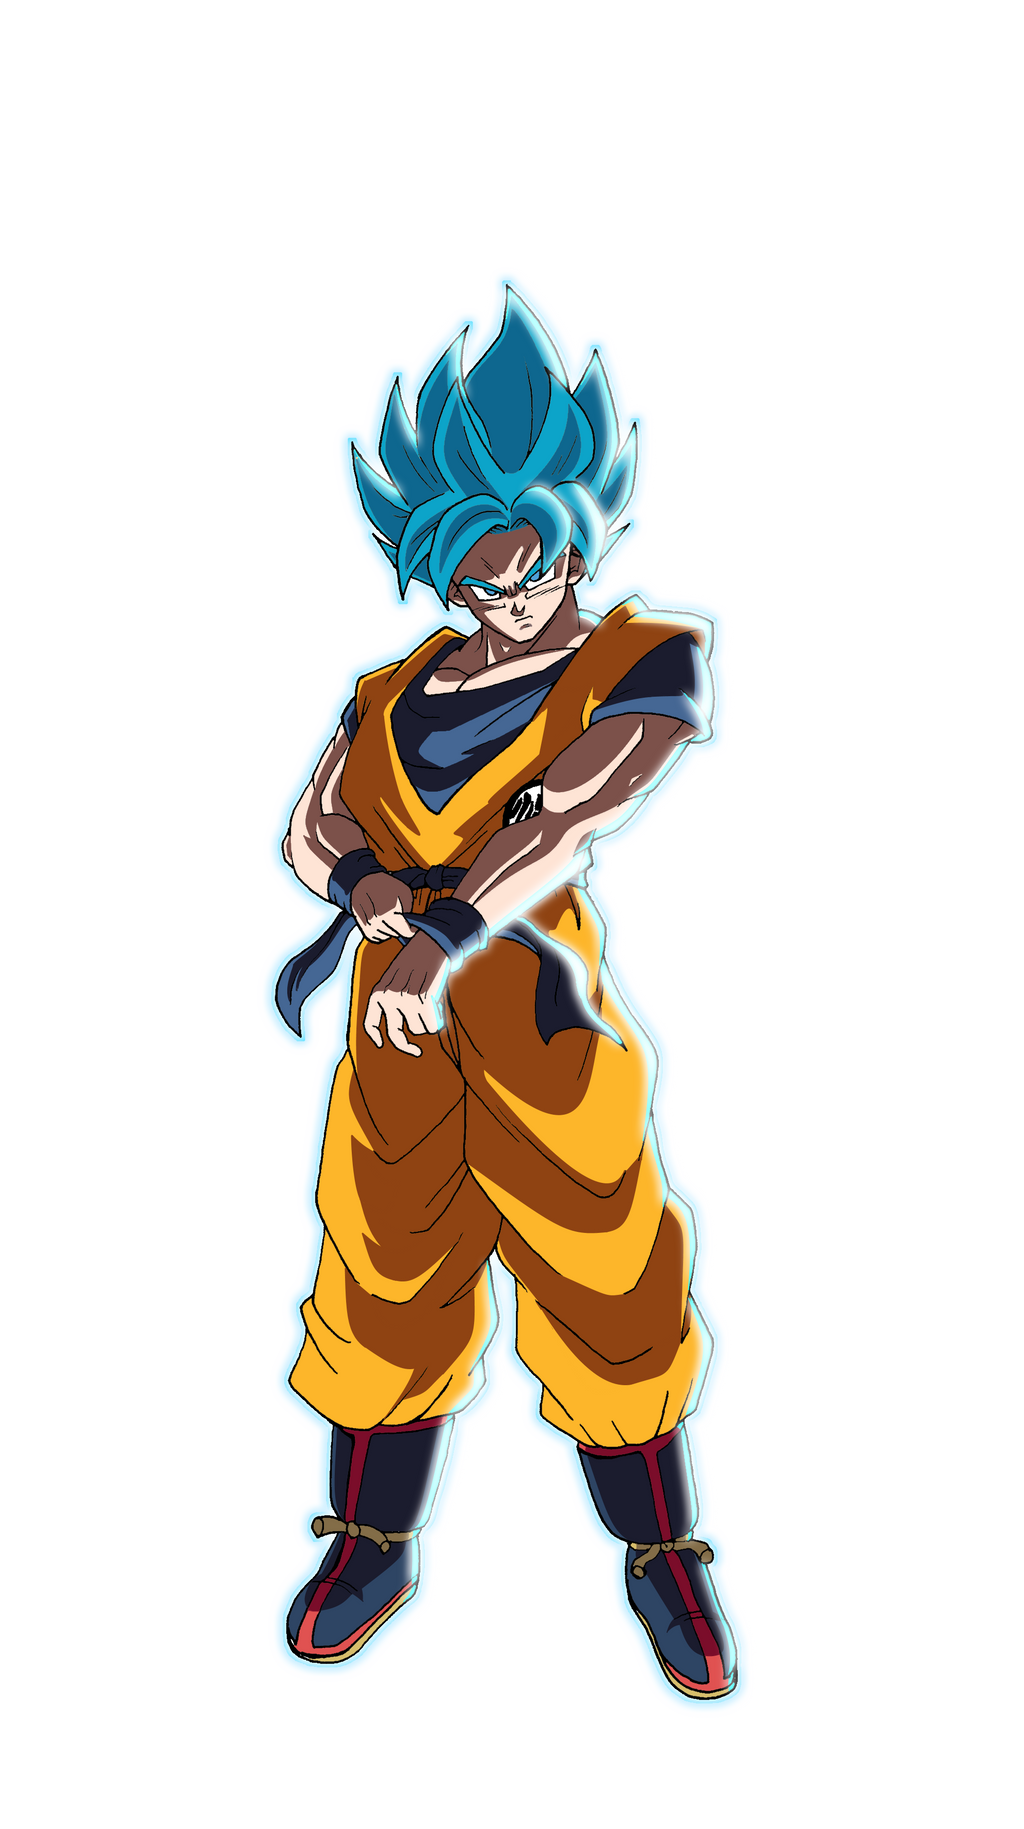 Son Goku Super Saiyan Blue Shintani Style by Teejee67 on DeviantArt